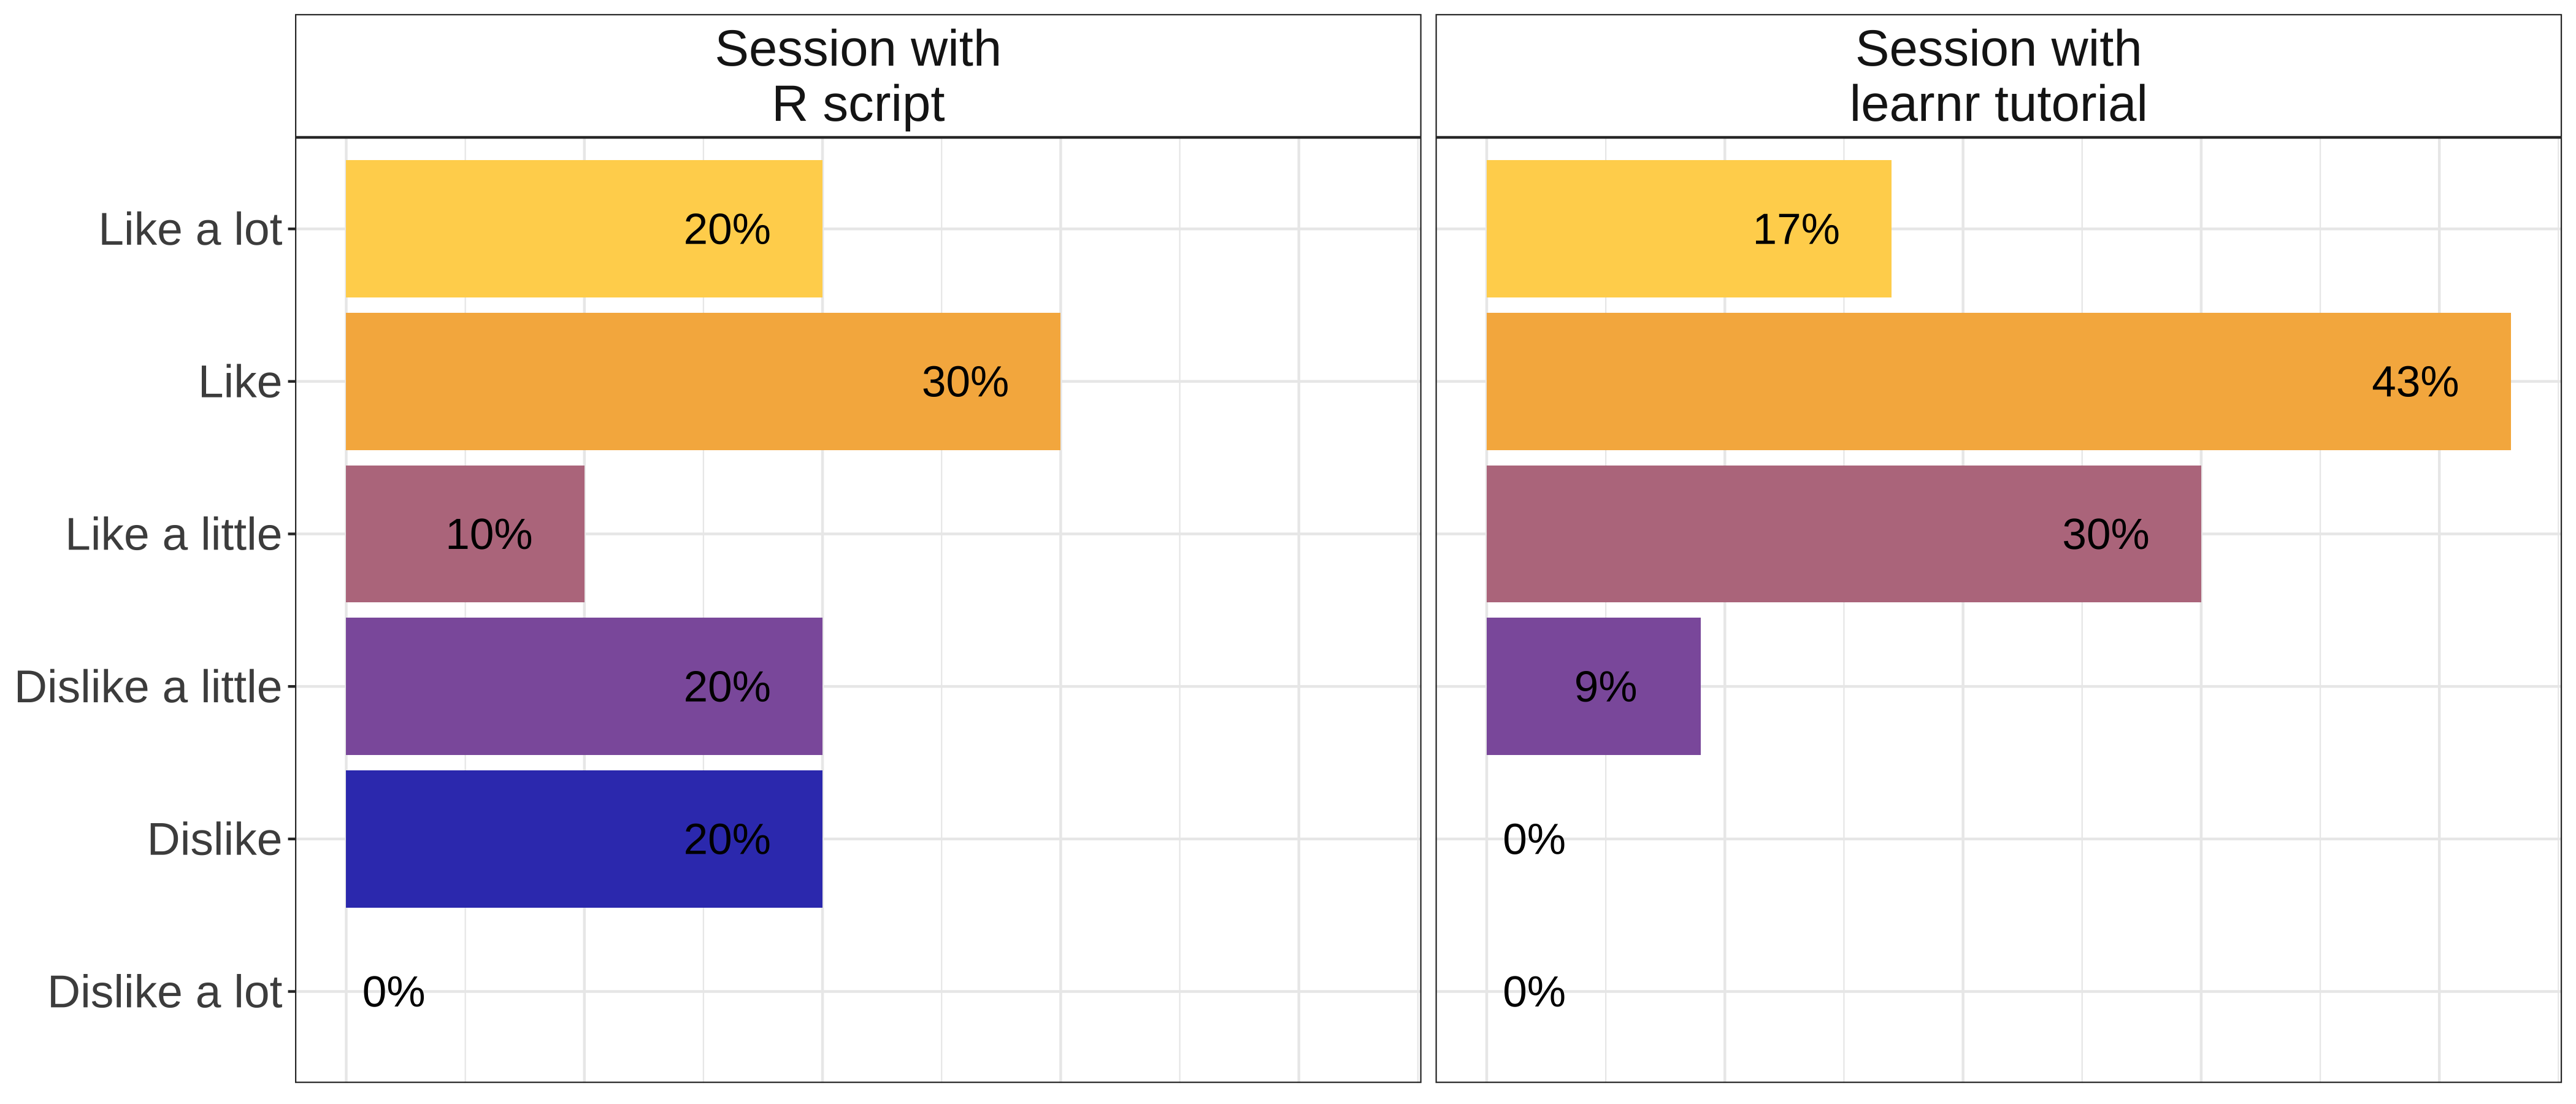 Student feedback shown as bar graph